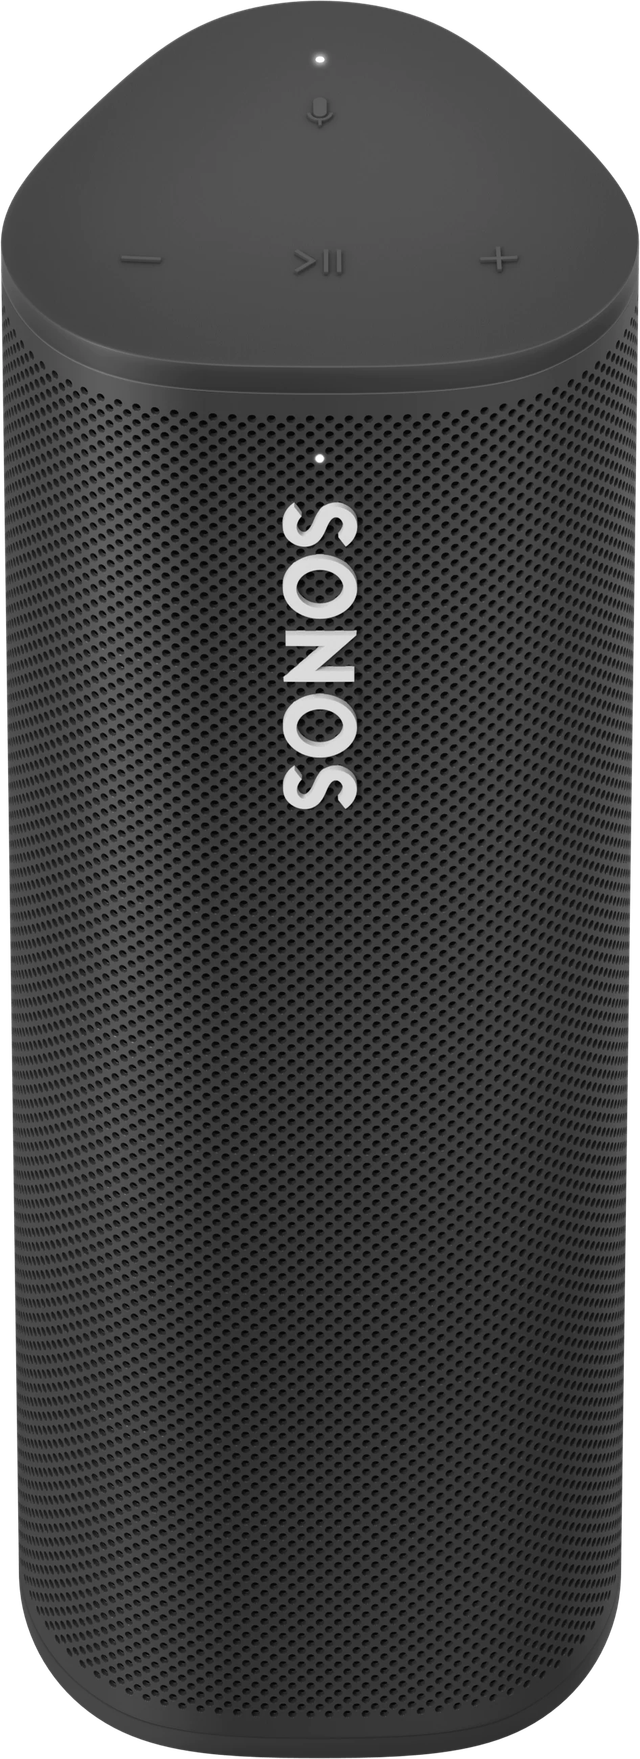 Sonos Roam - Lightweight Portable Smart Speaker